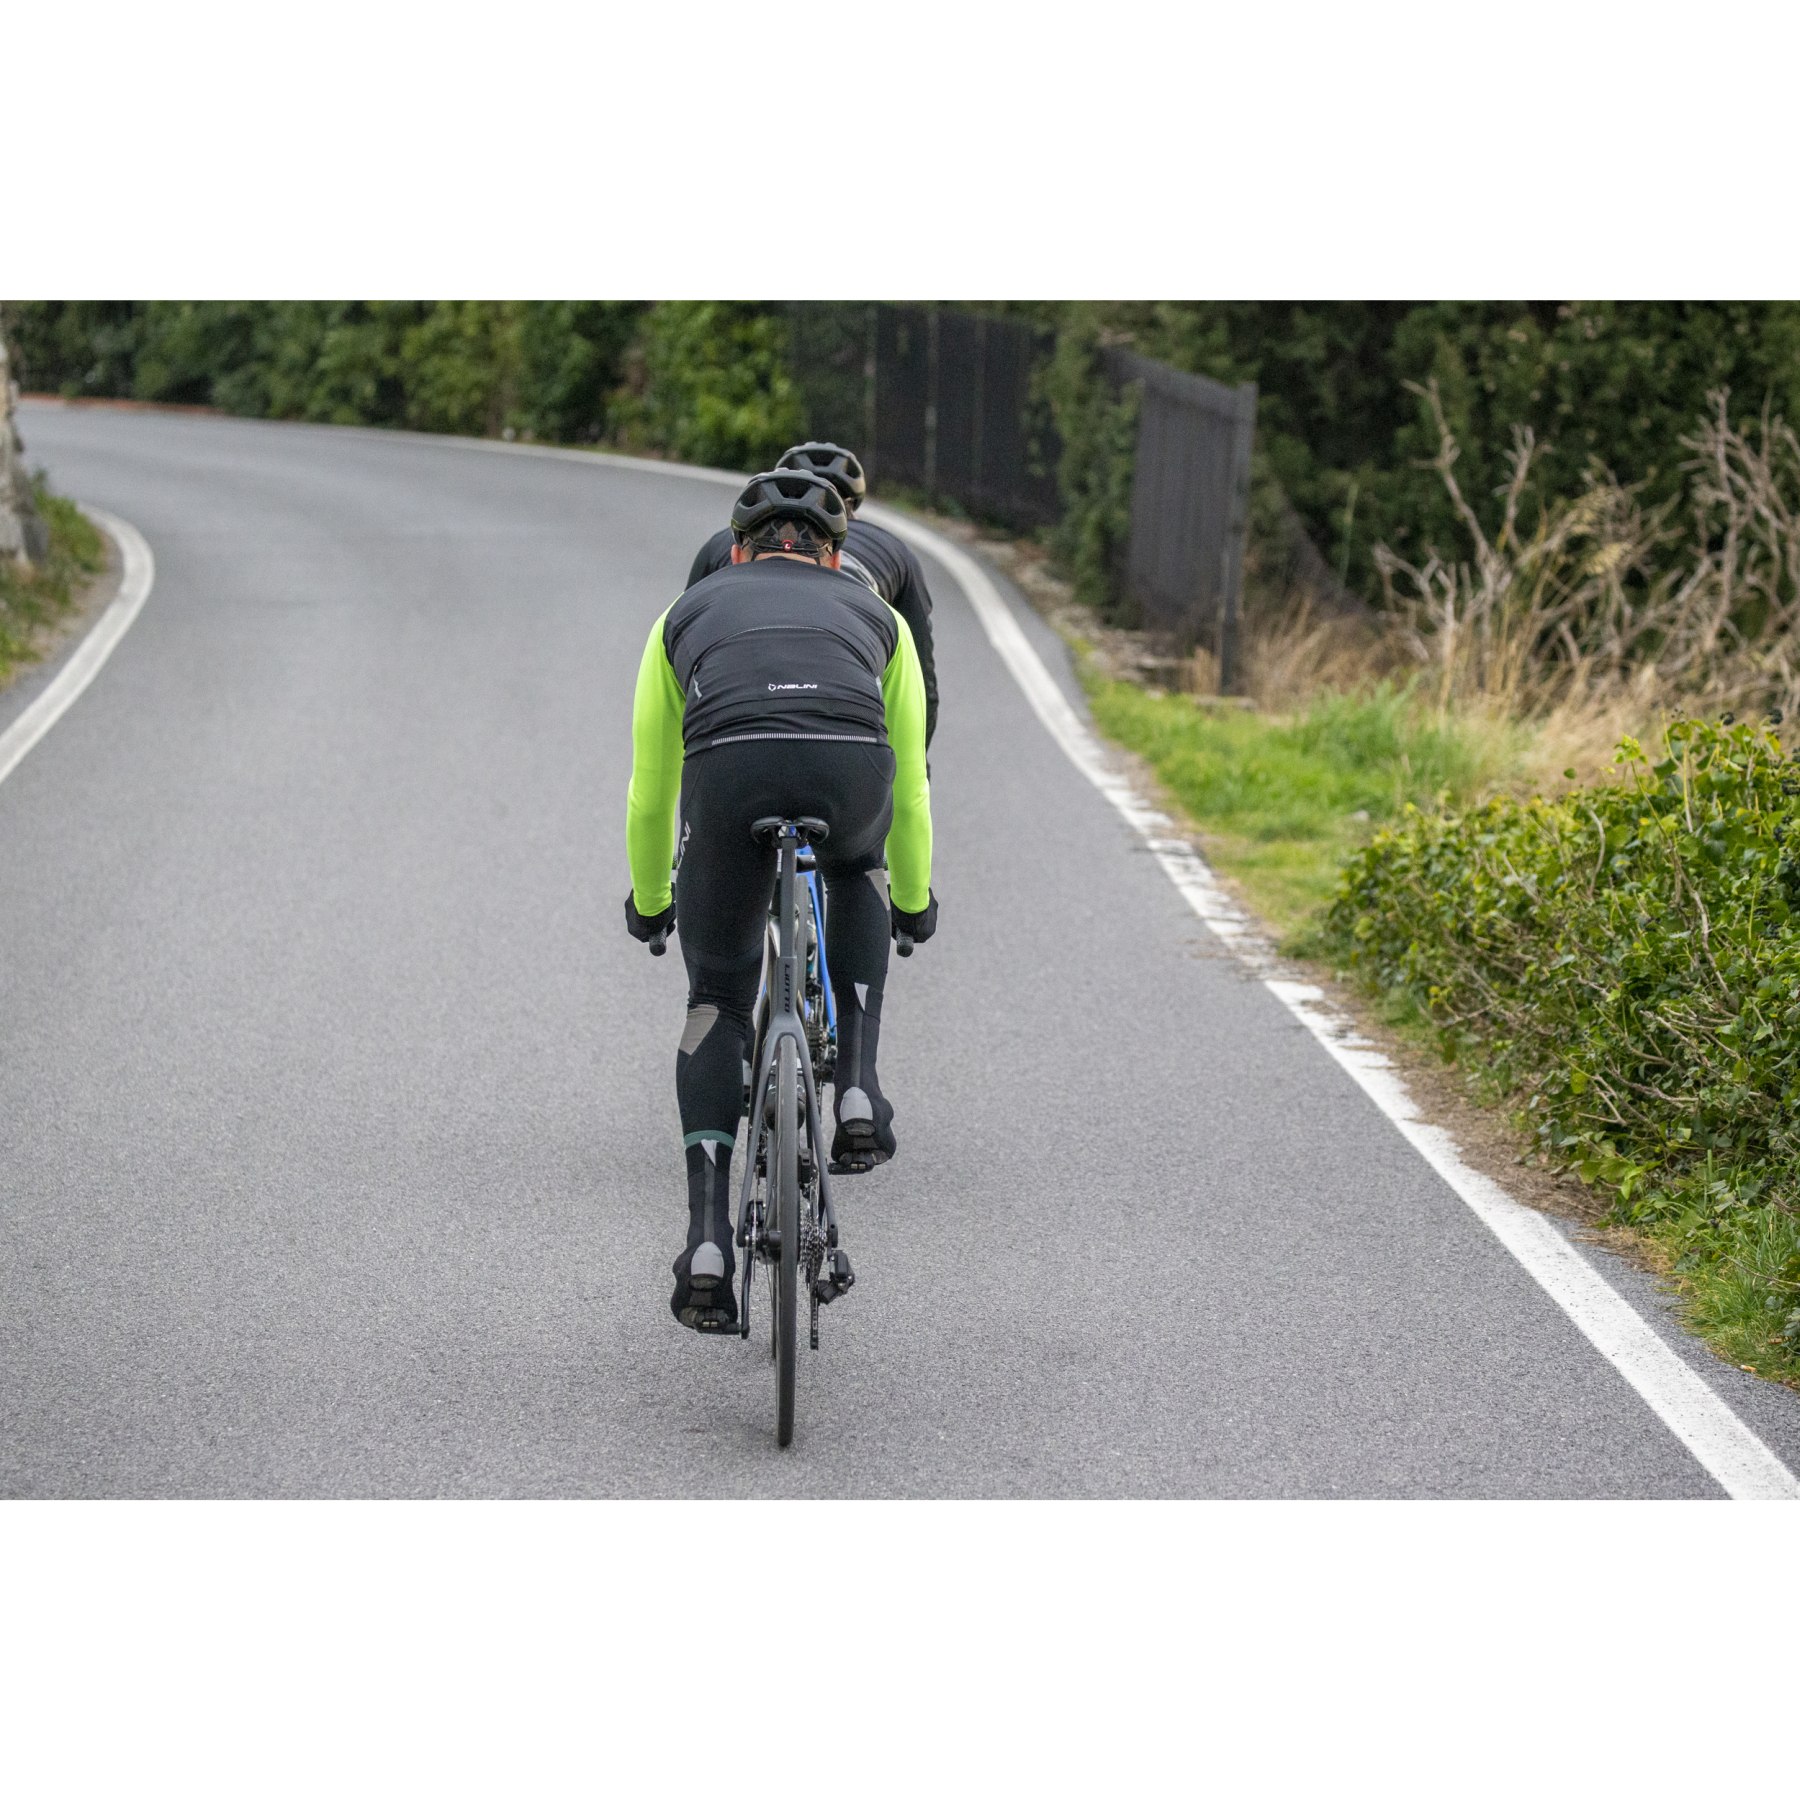 Camiseta térmica mujer ciclismo Van Rysel Roadc 500 negra